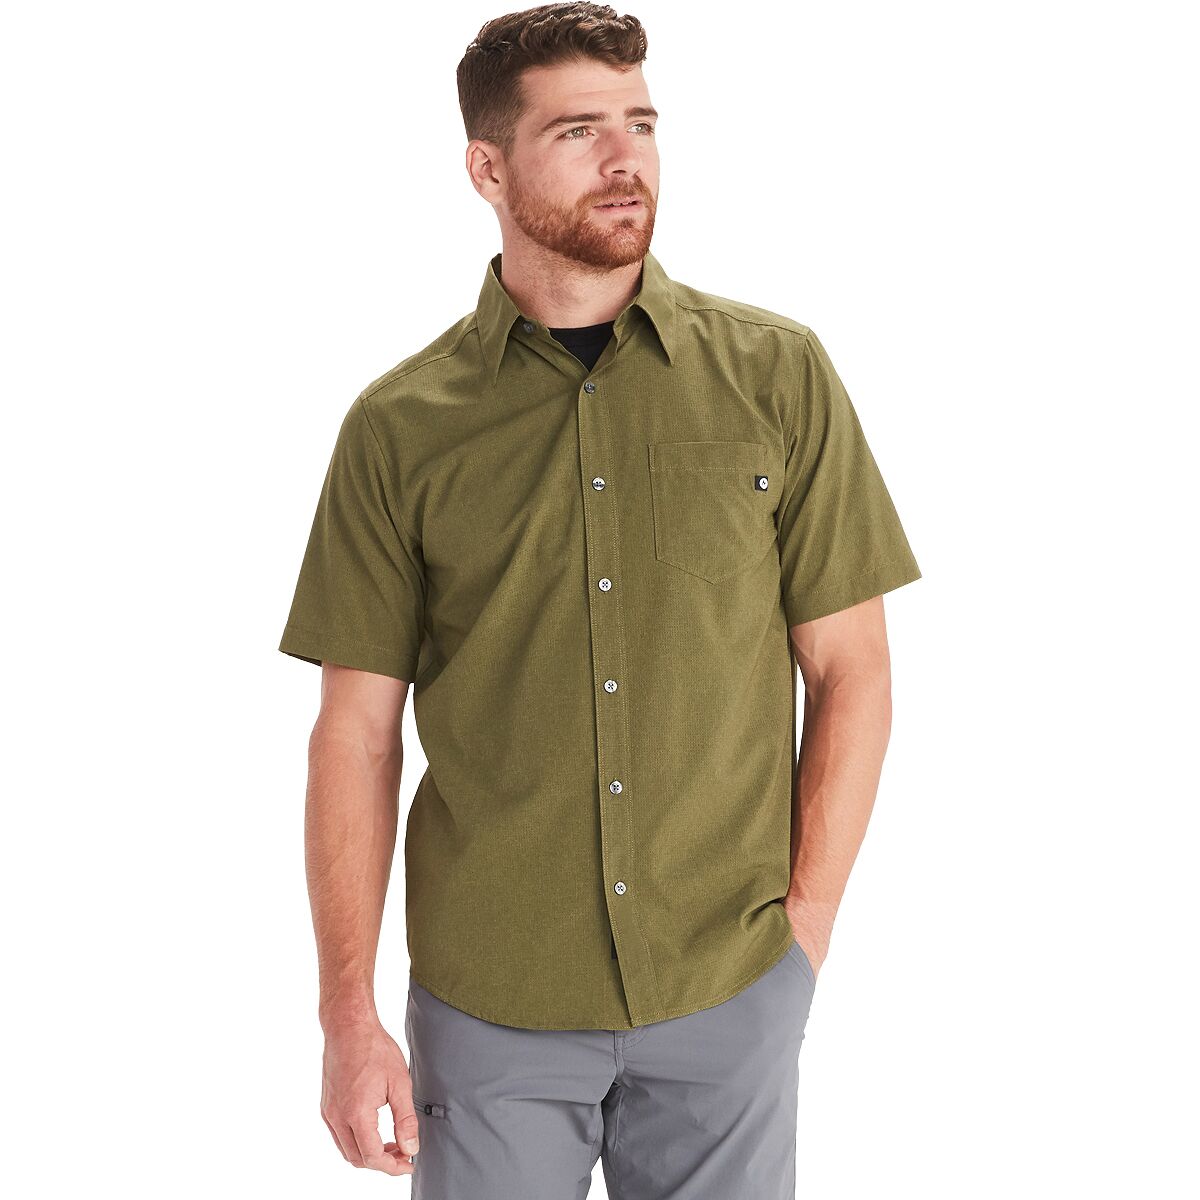 Aerobora Short-Sleeve Shirt - Men